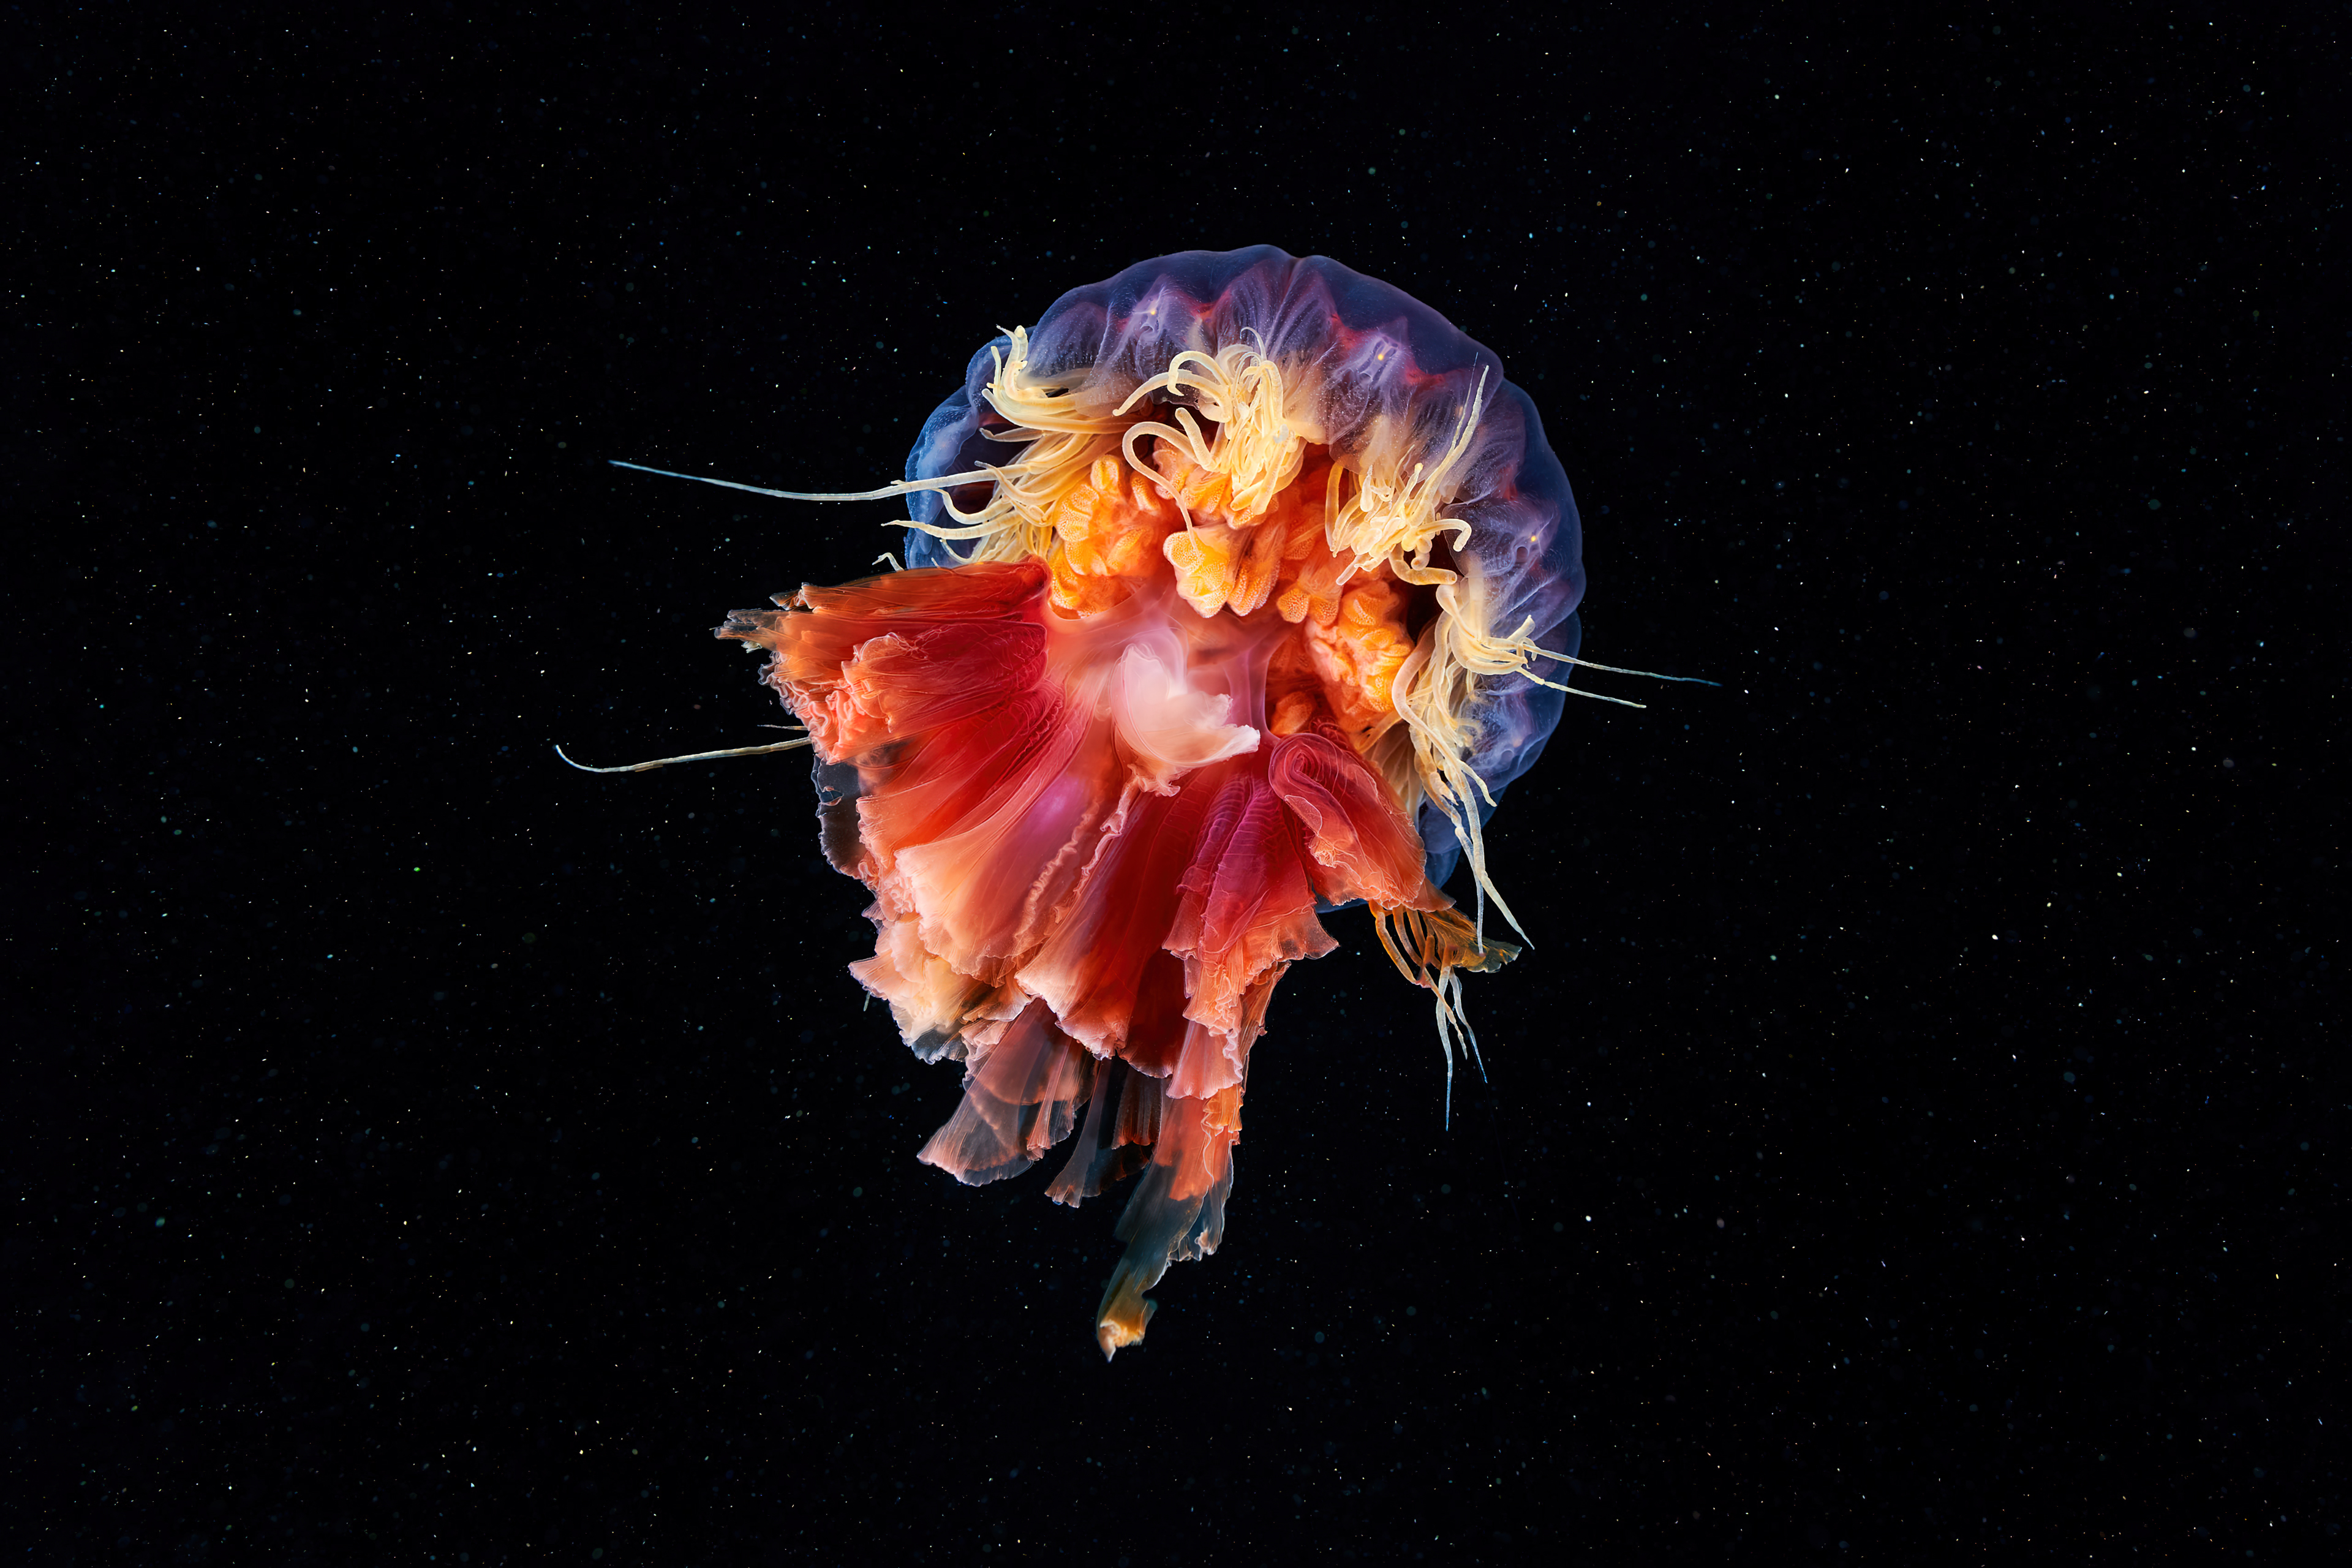 An unusually beautiful jellyfish